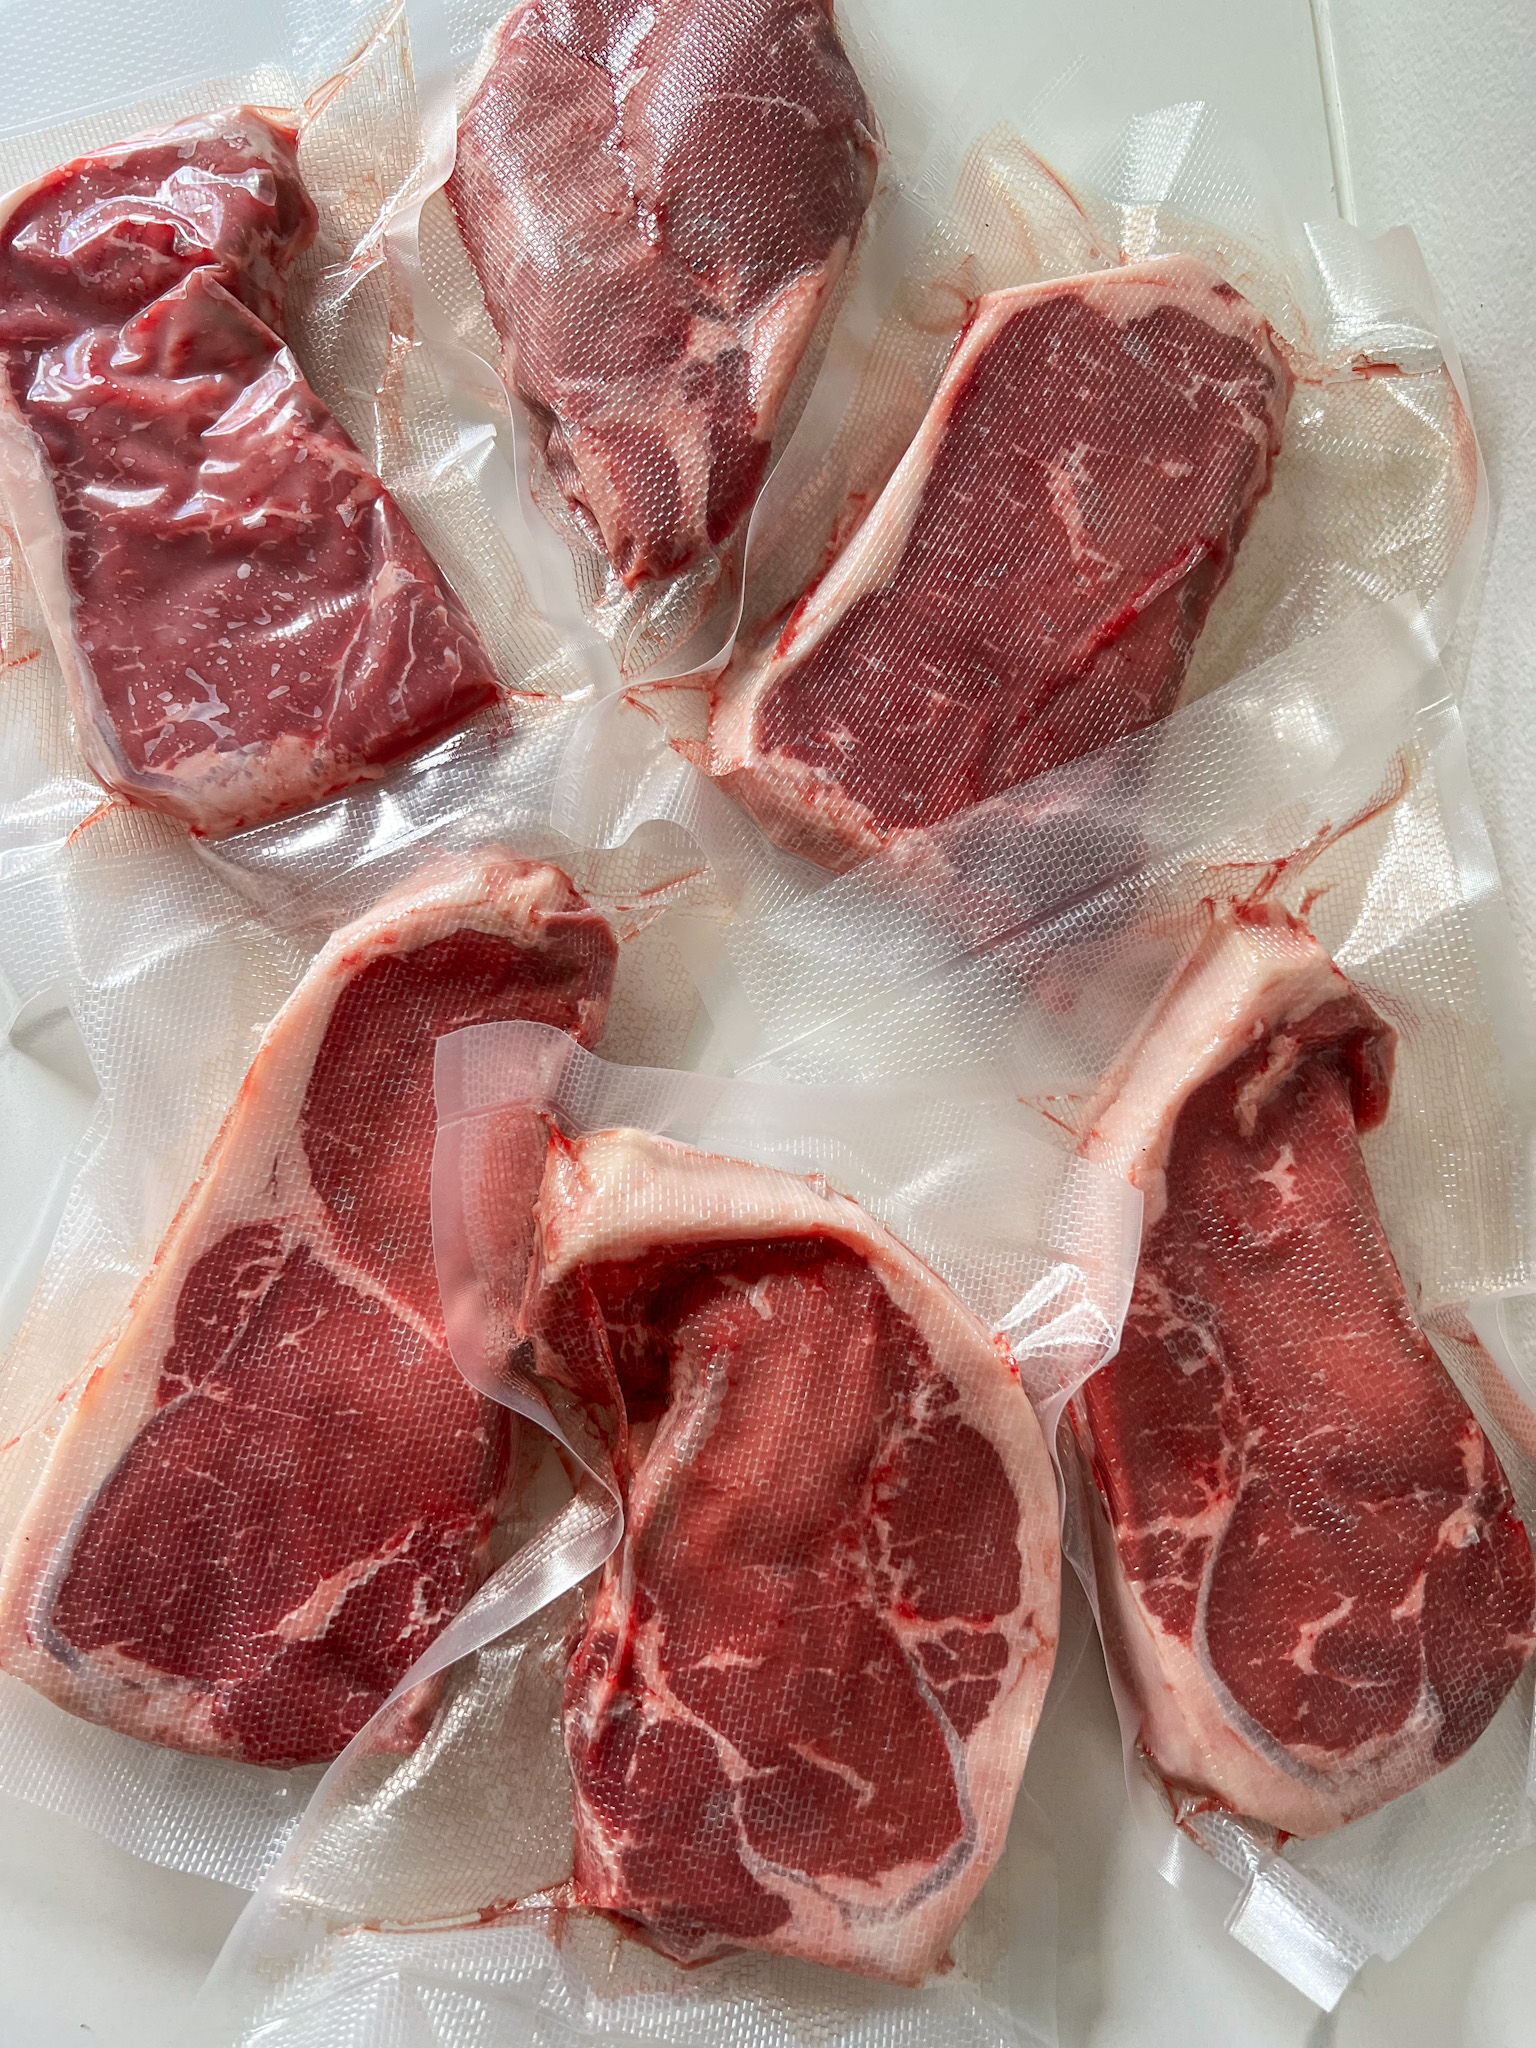 Strip steaks that have been vacuum sealed in plastic